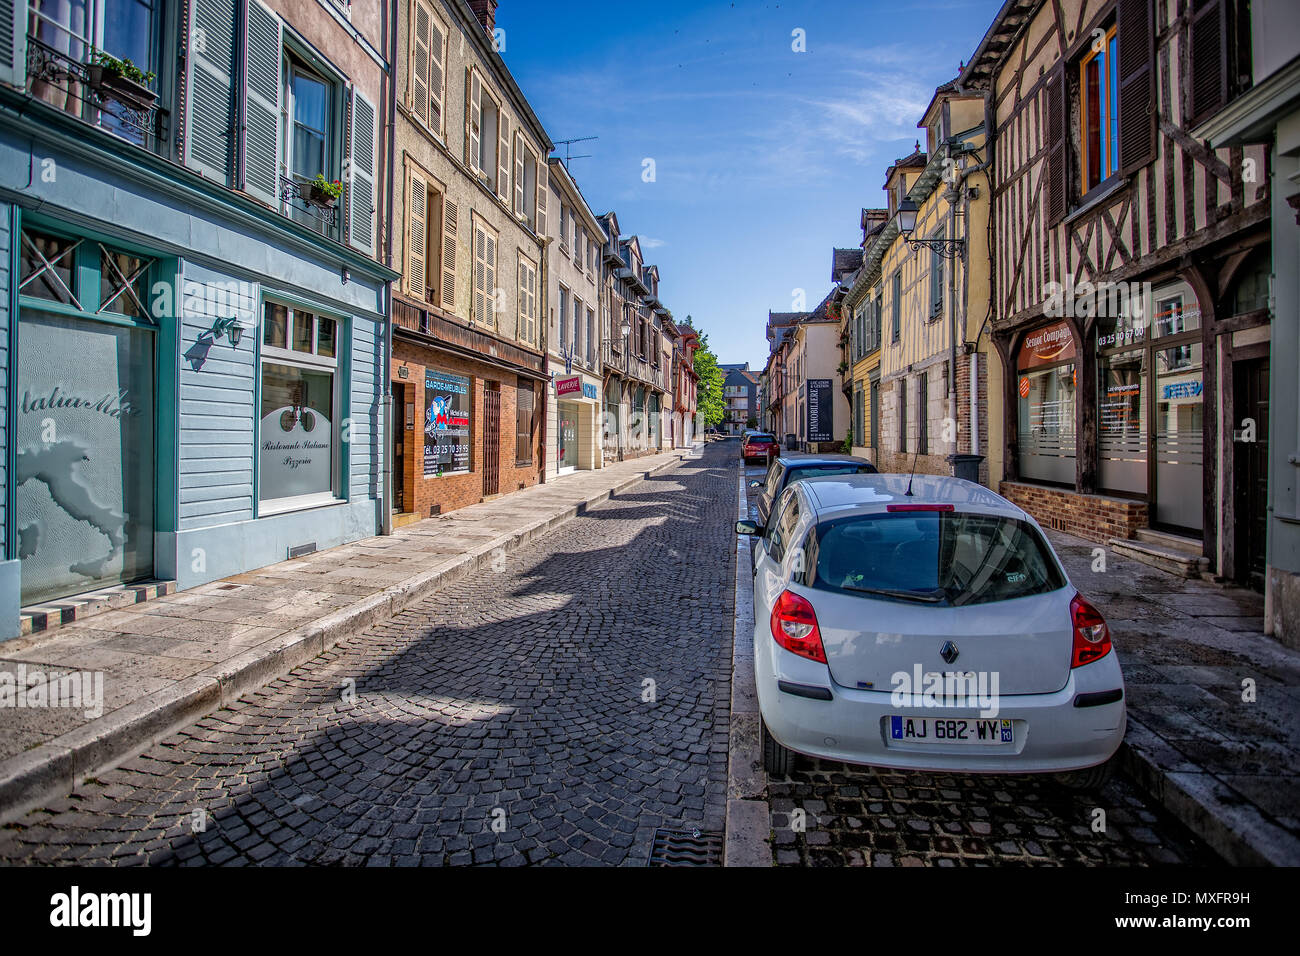 Medieval street taken in Troyes, Aube, France on 7 June 2015 Stock Photo